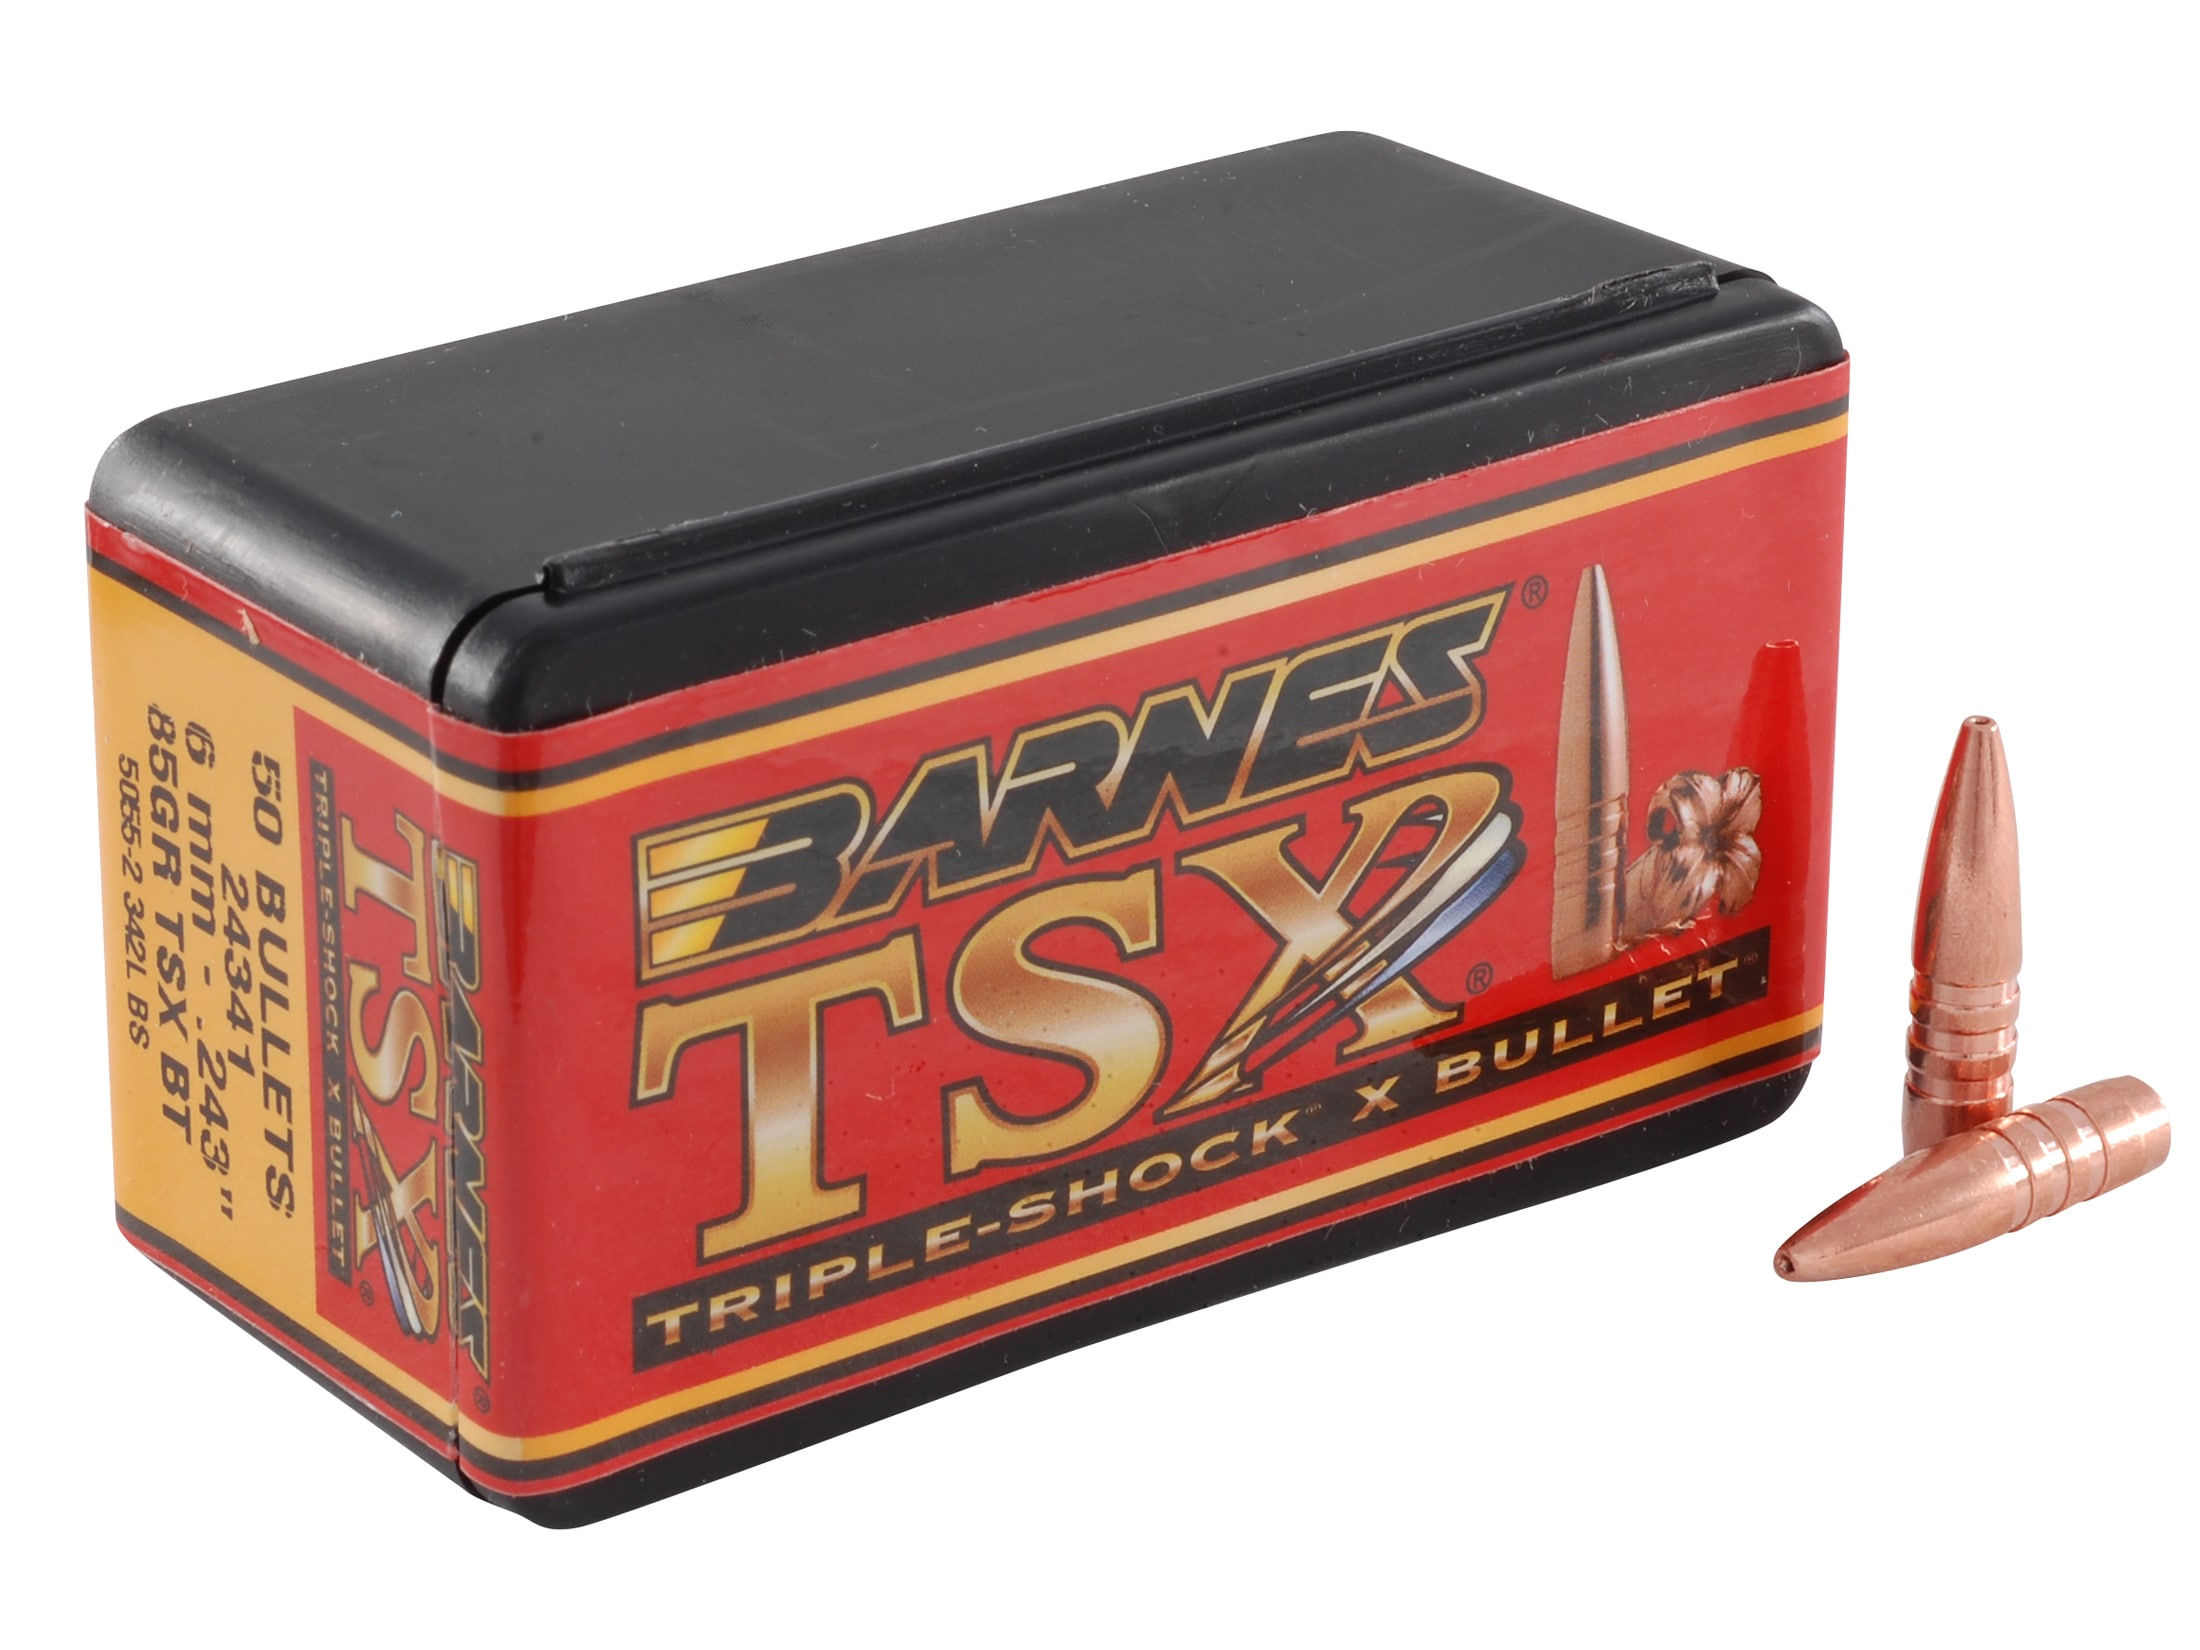 Barnes Triple-Shock X (TSX) Bullets 243 Caliber, 6mm (243 Diameter) 85 Grain Hollow Point Boat Tail Lead-Free Box of 50